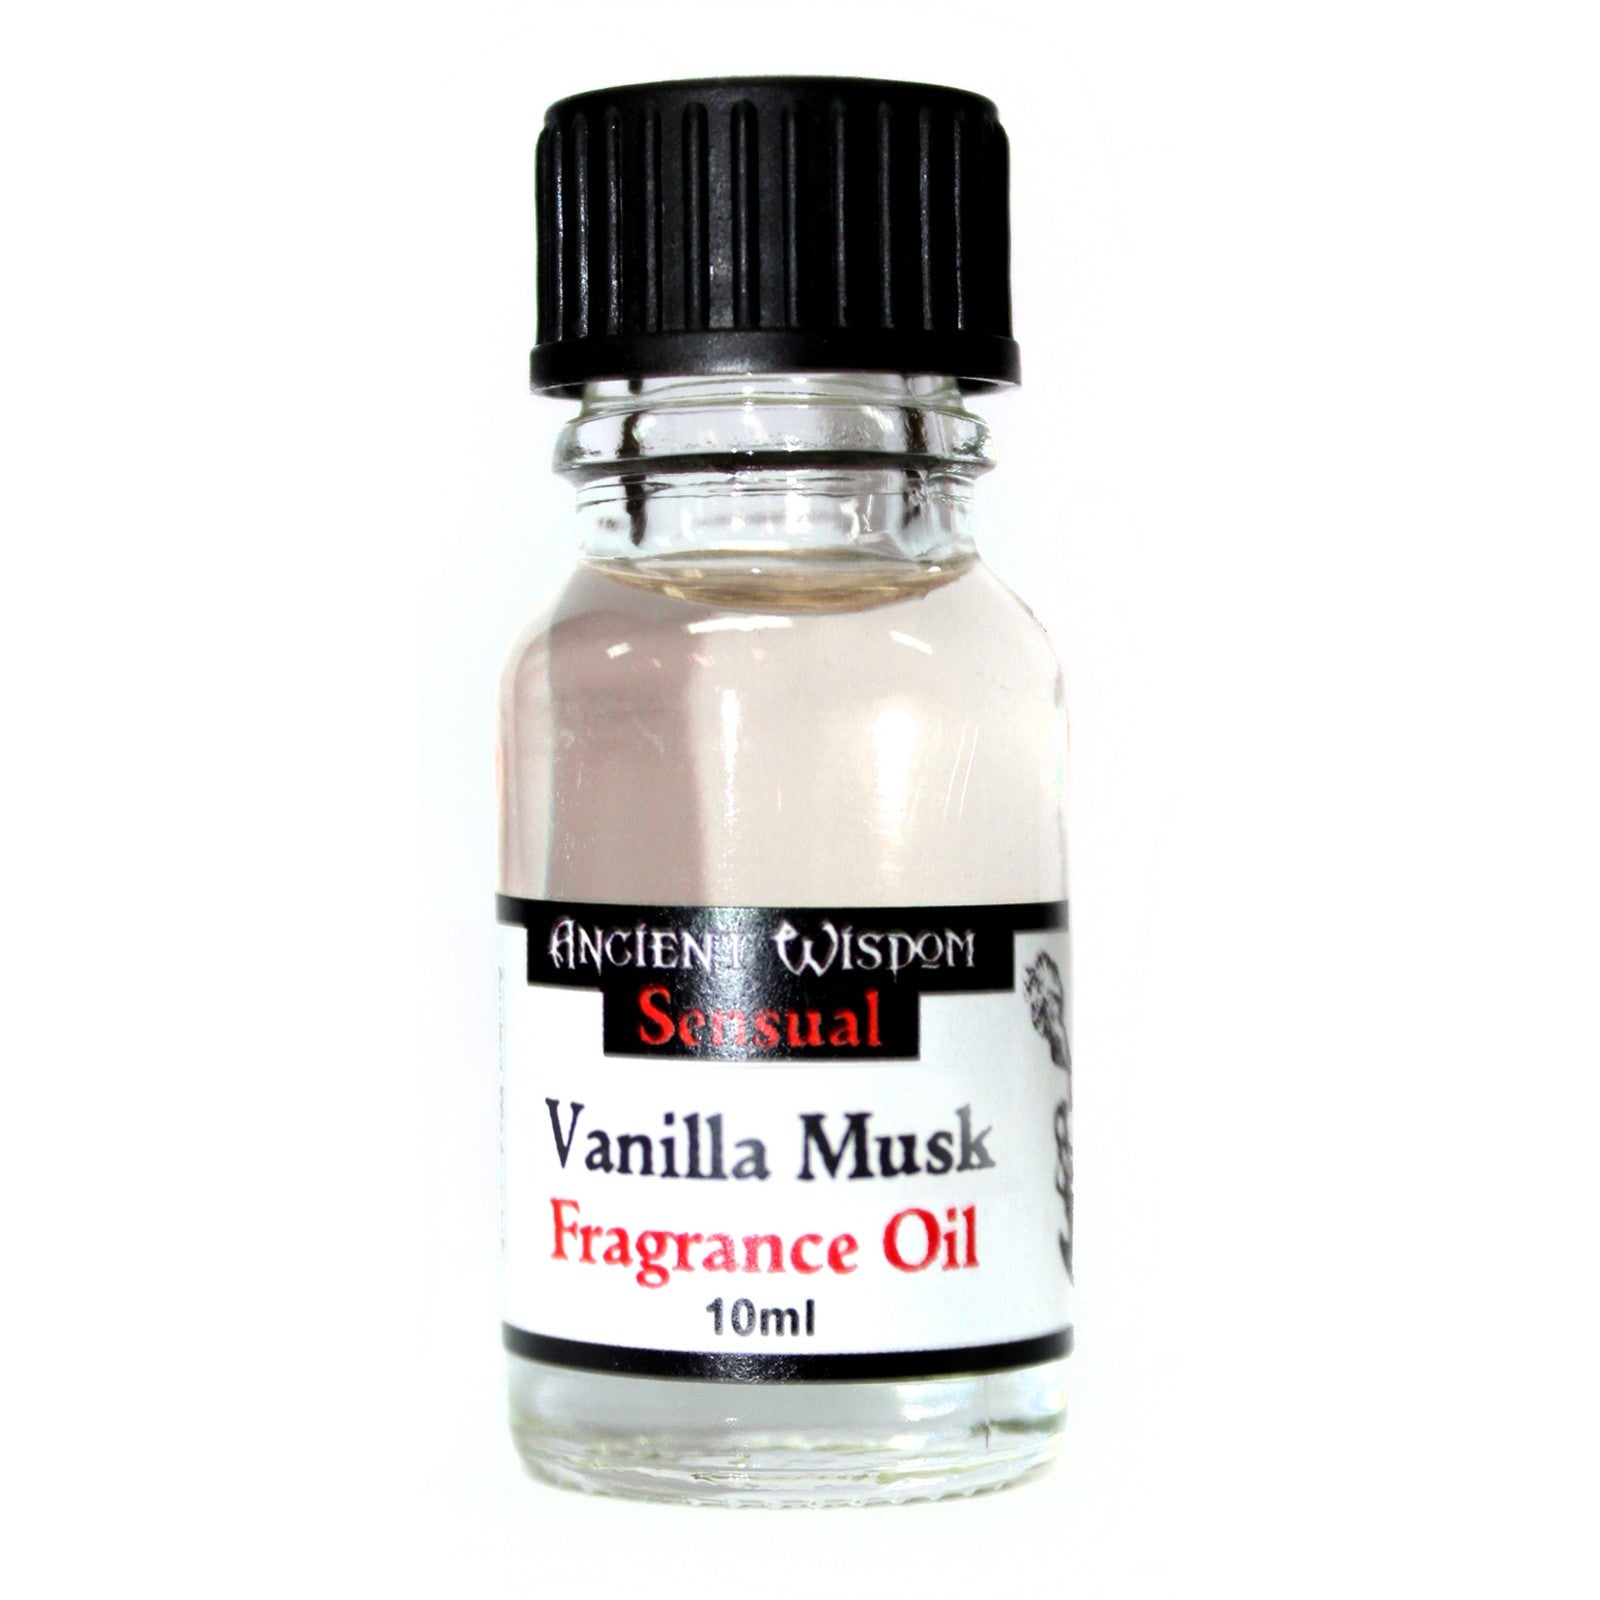 View 10ml Vanilla Musk Fragrance Oil information